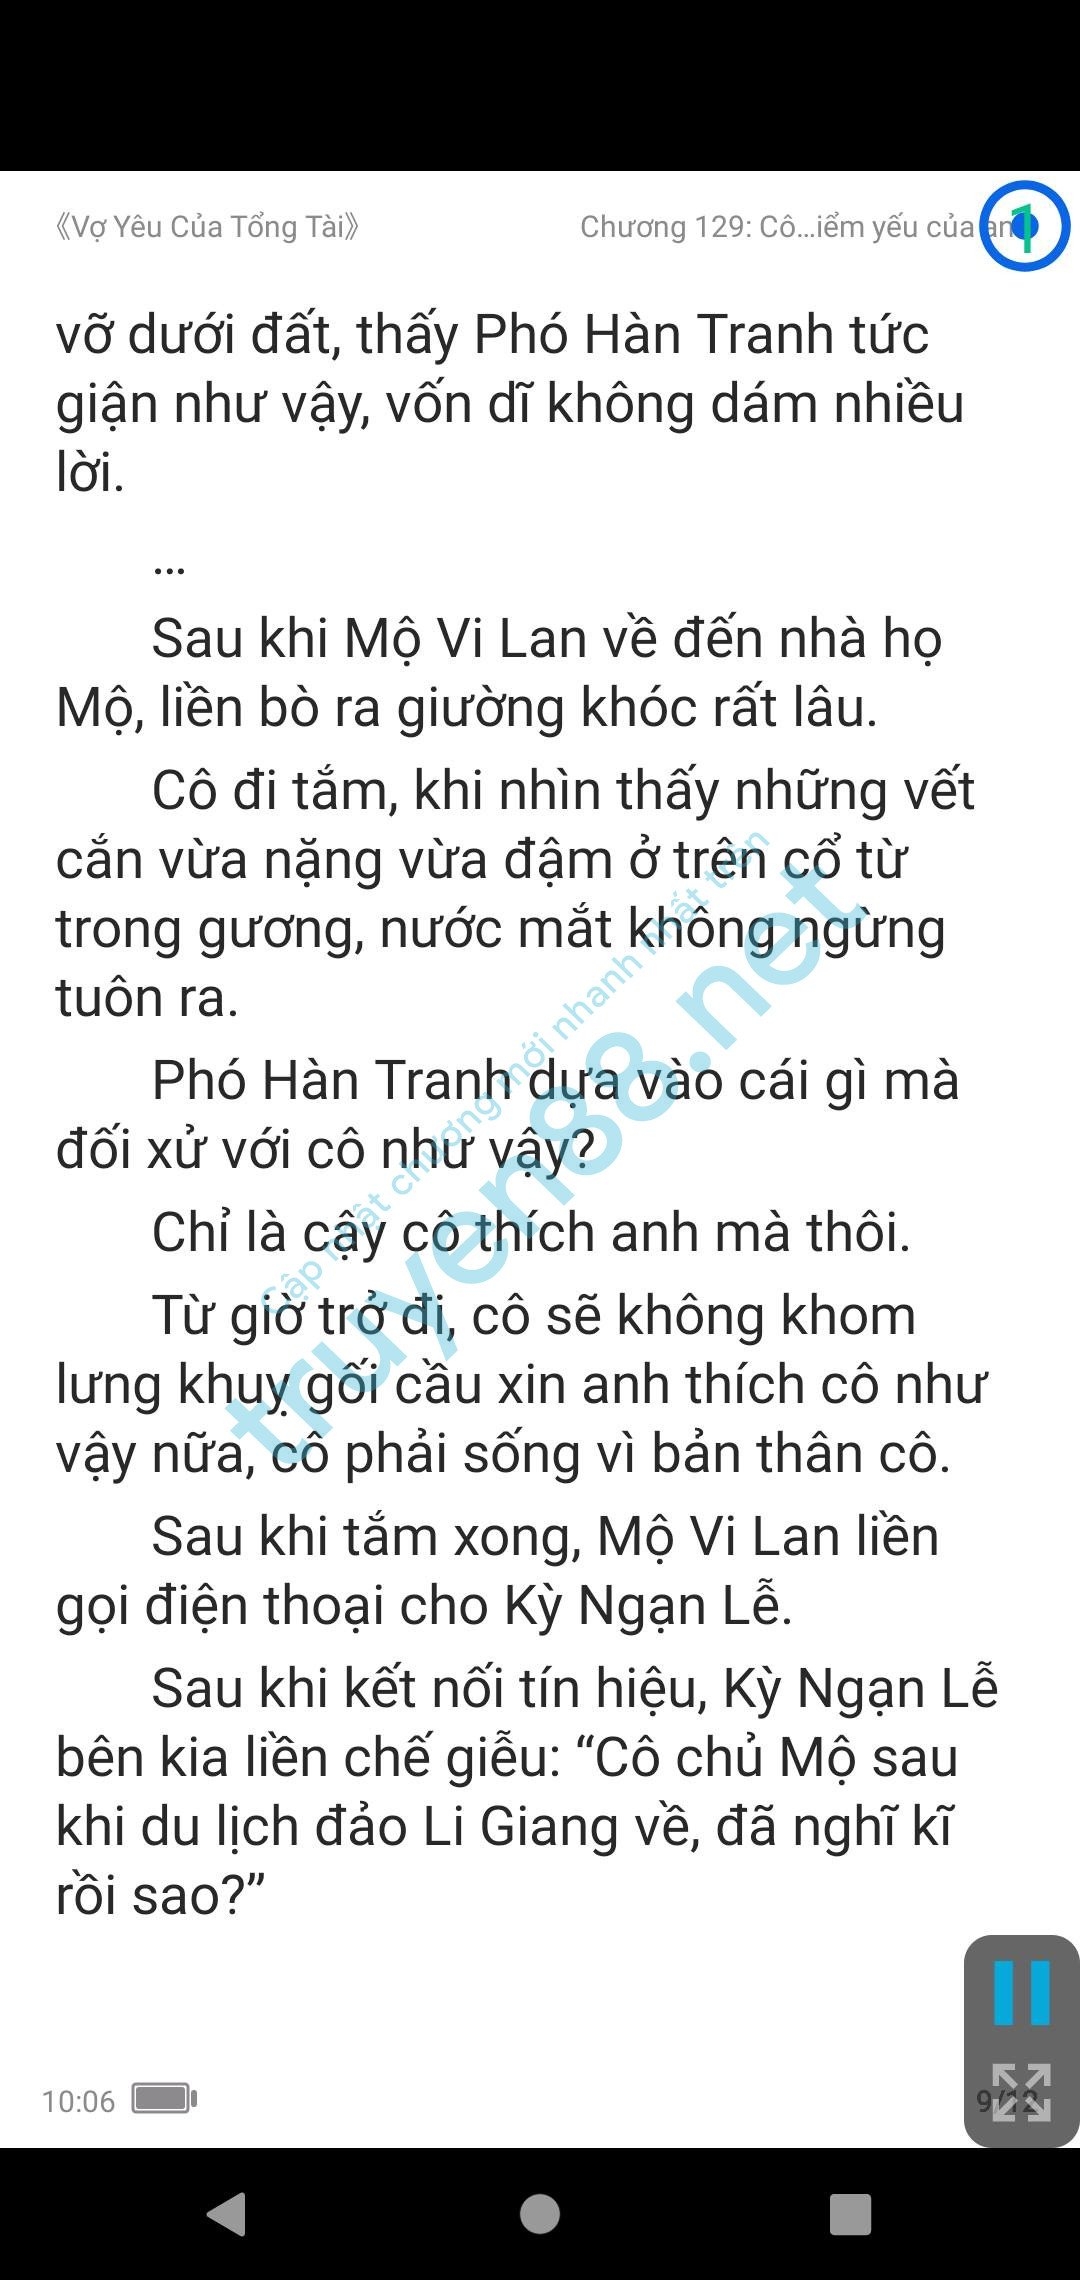 vo-yeu-cua-tong-tai-mo-vi-lan--pho-han-tranh-129-0